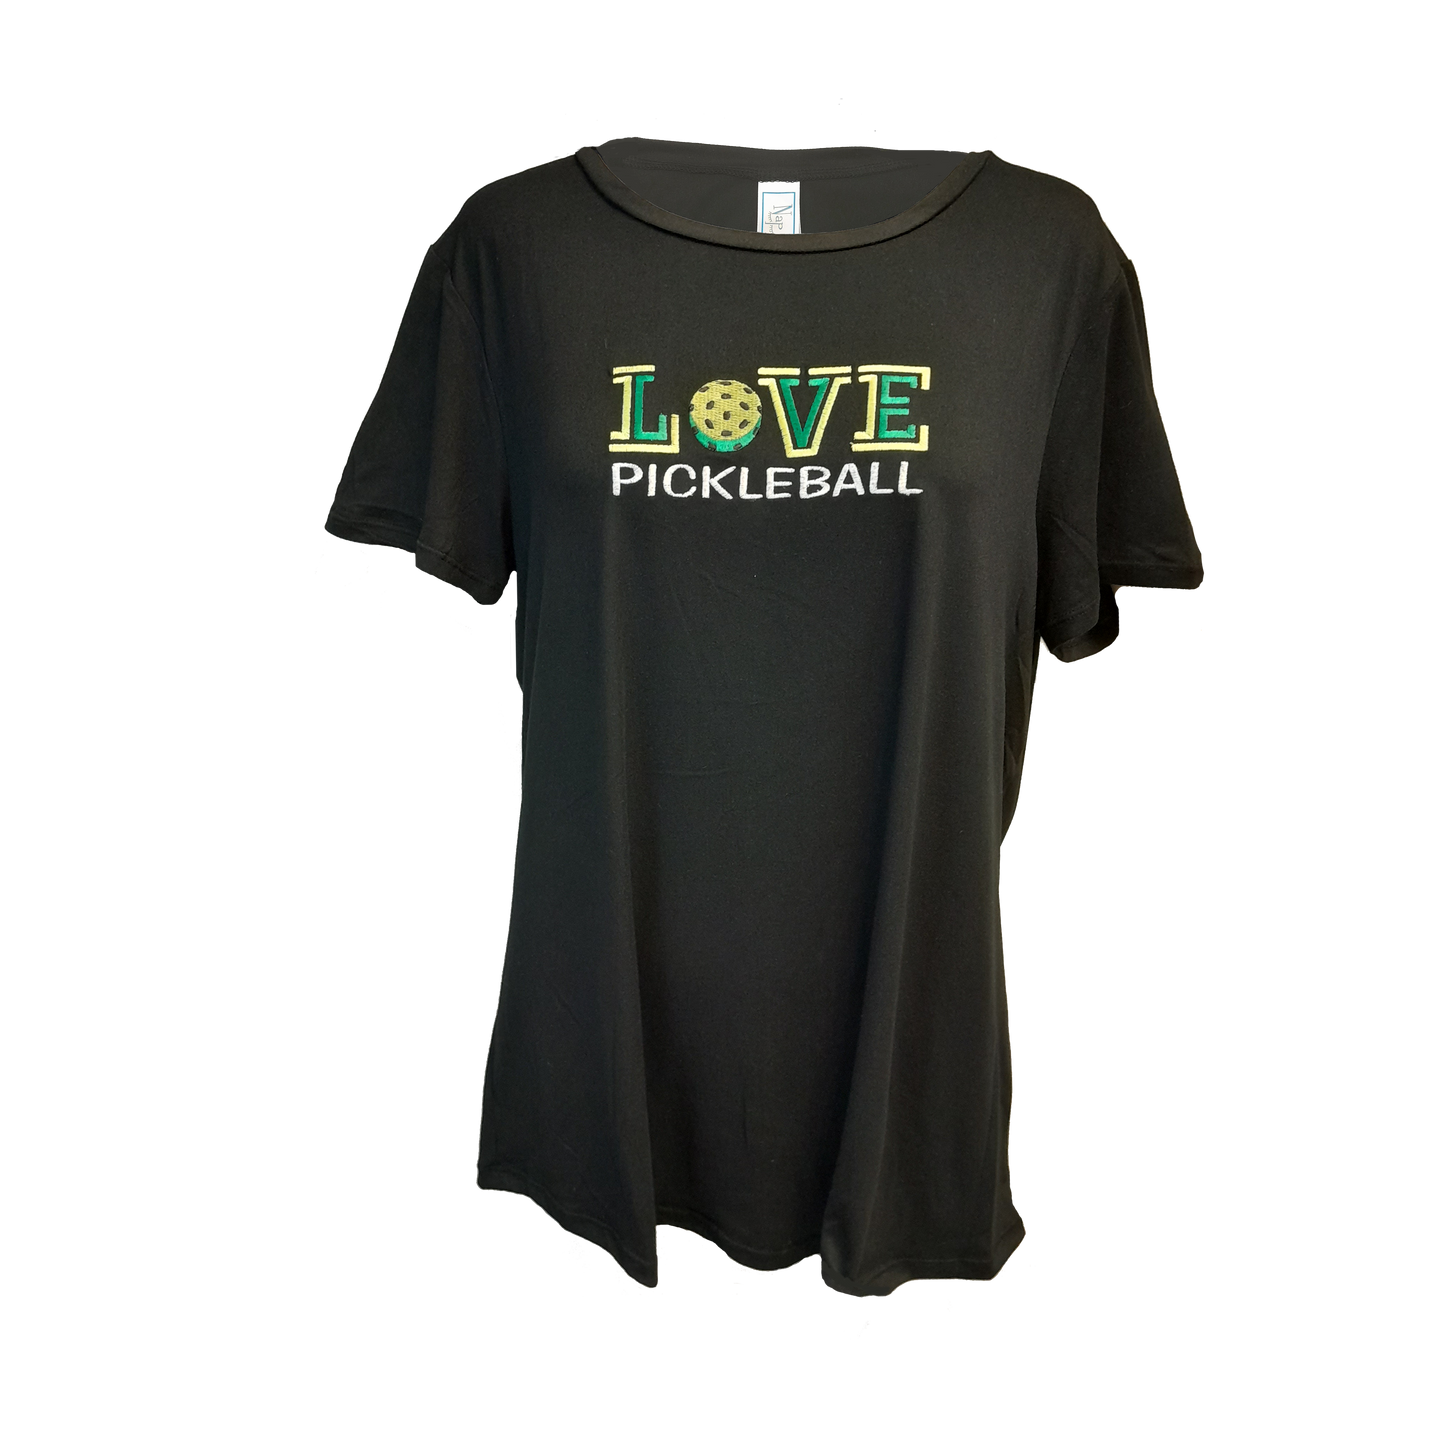 T250BKXXTS "Love Pickleball" Sleep Shirt, by Nap Time®